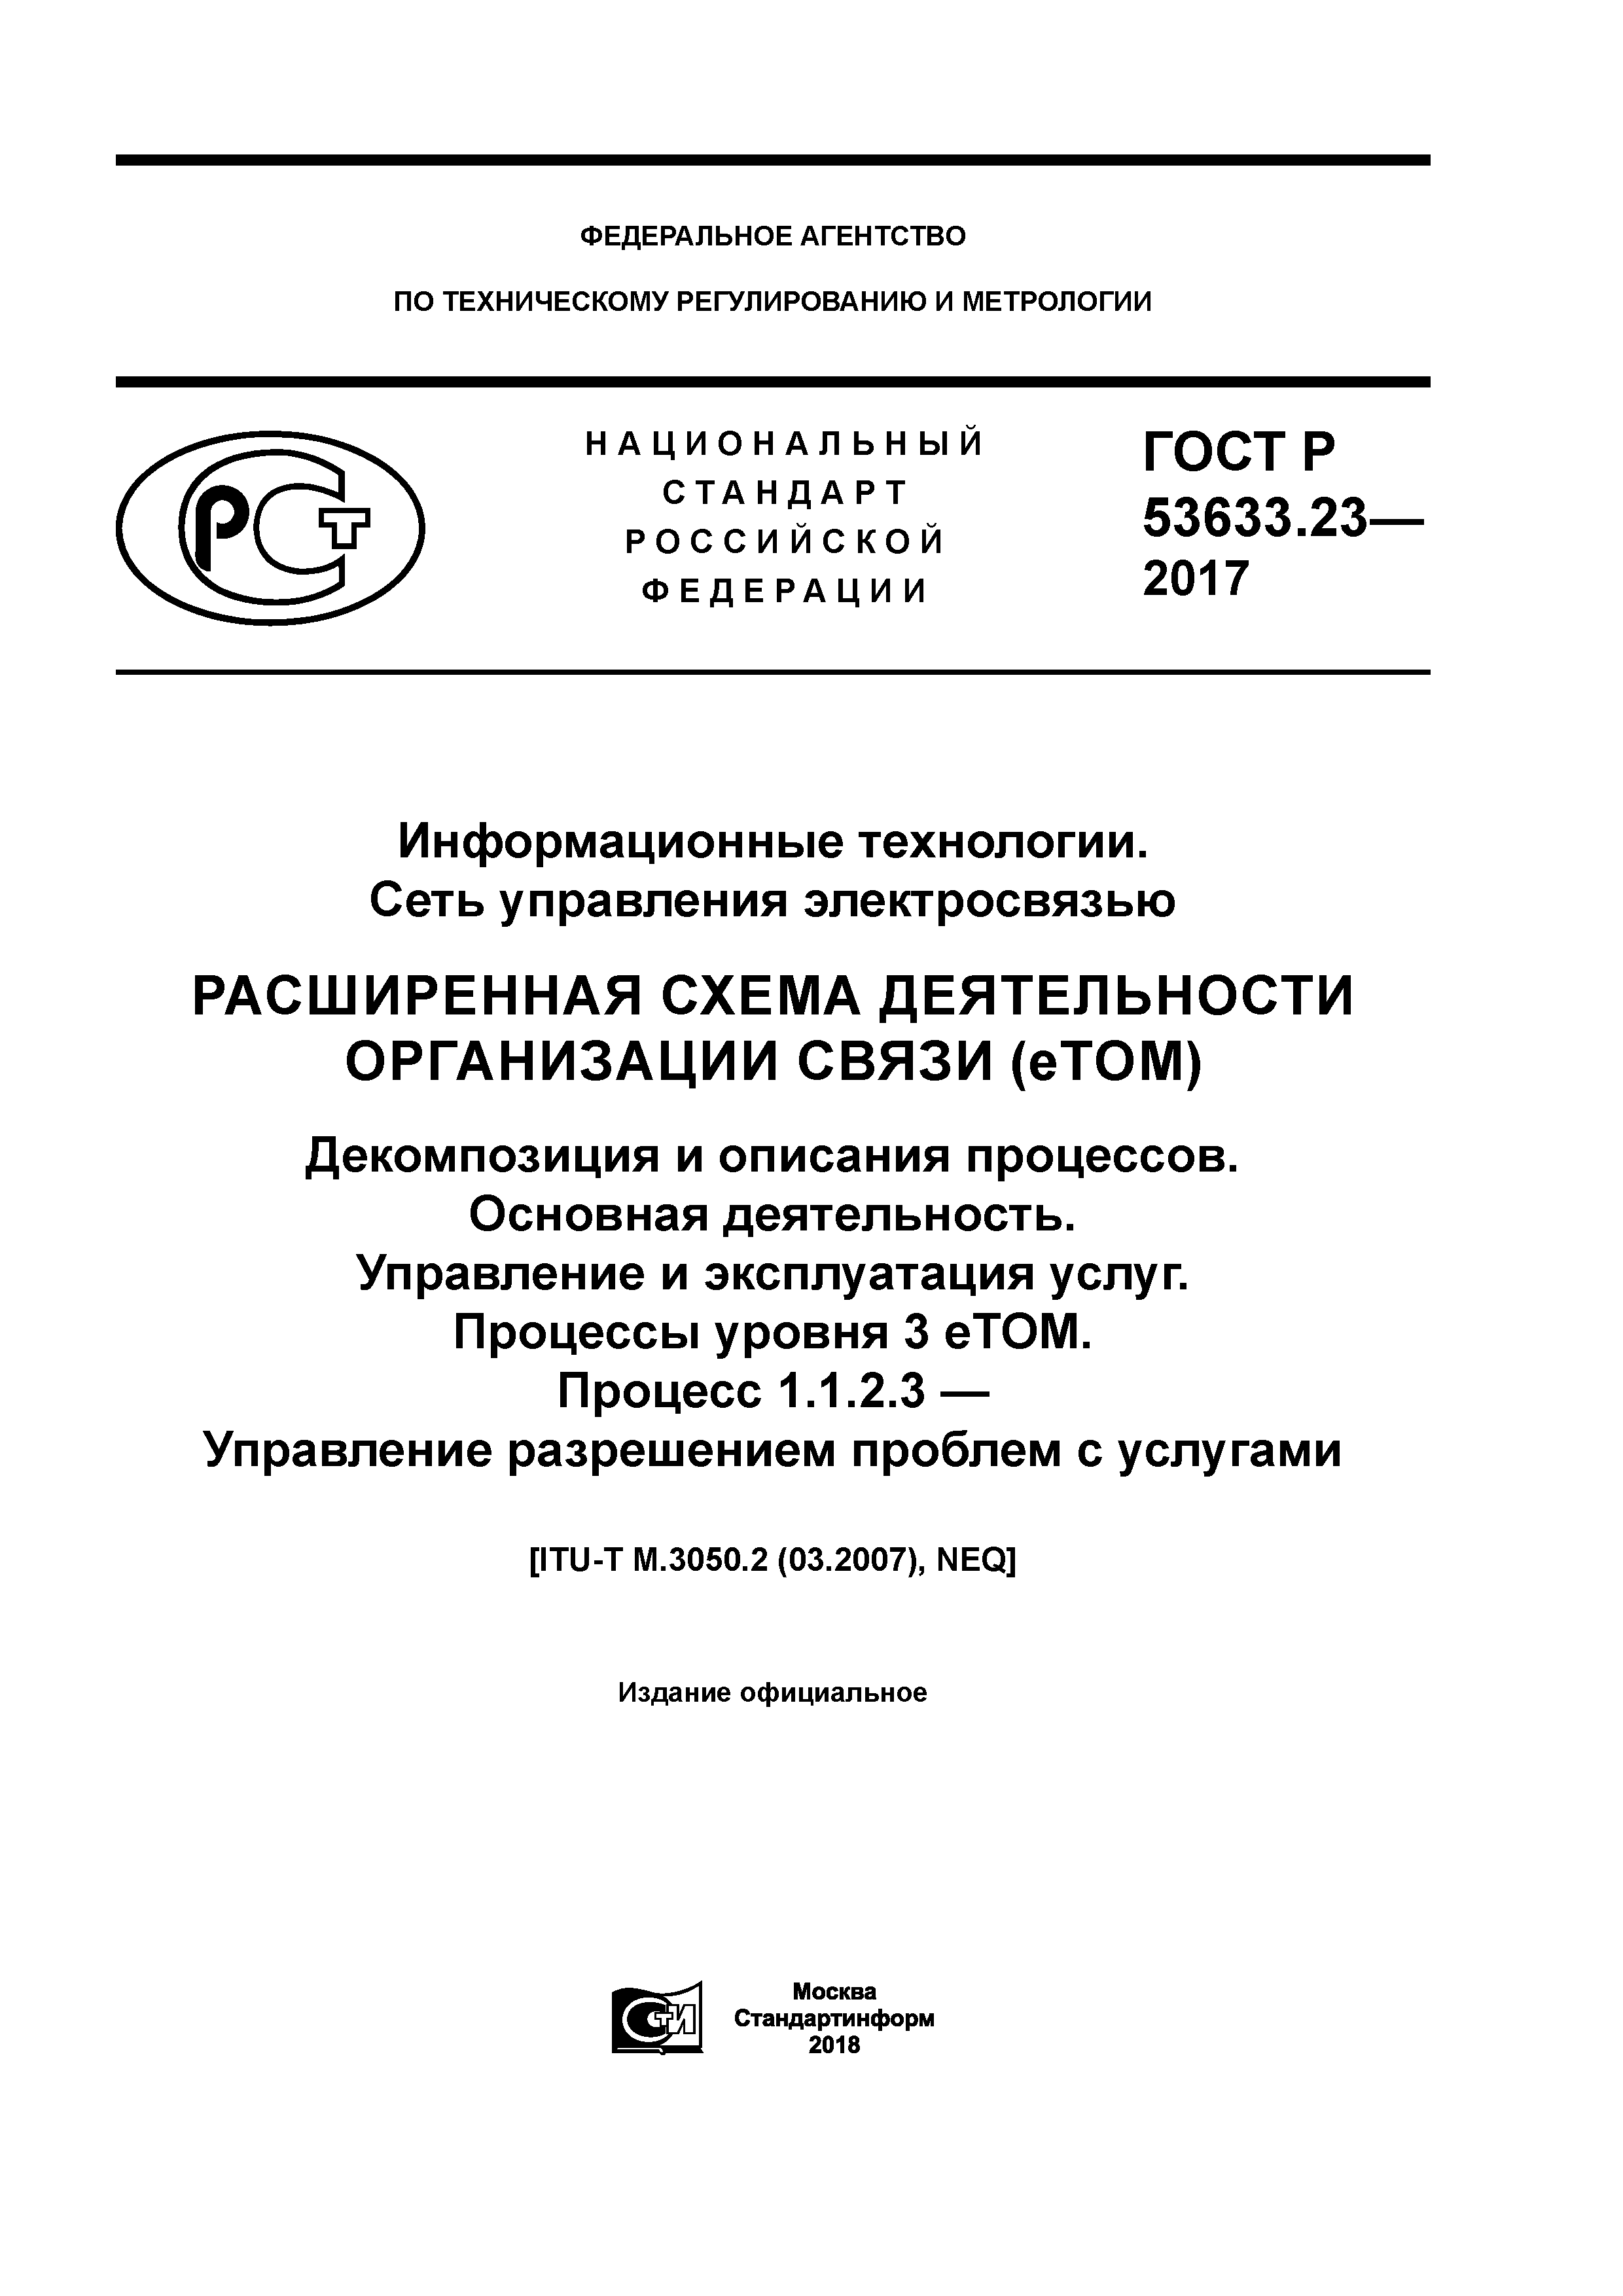 ГОСТ Р 53633.23-2017